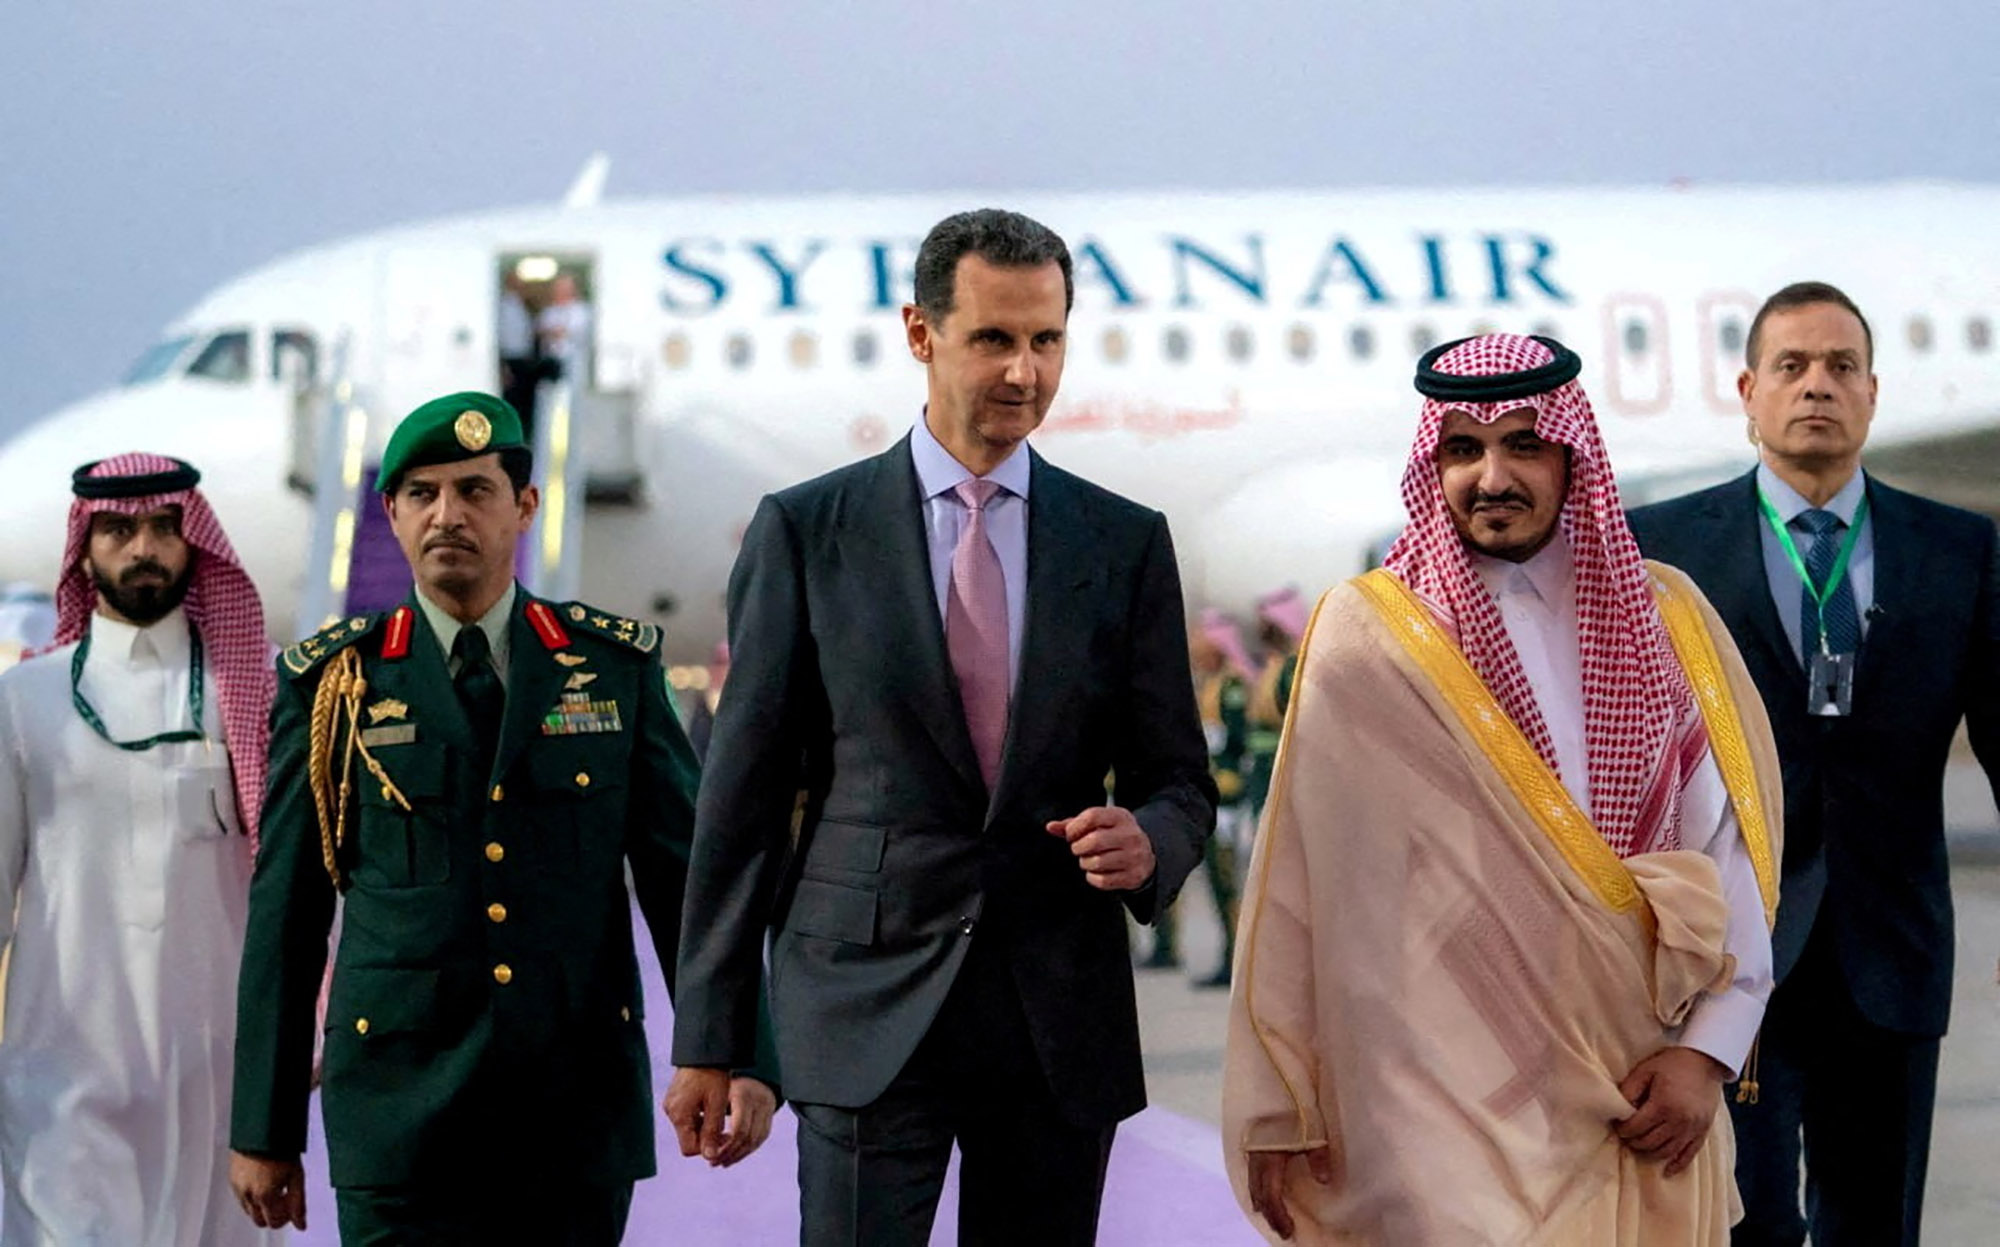 Syria's President Bashar al-Assad arrives in Jeddah, Saudi Arabia, to attend the Arab League summit, on May 18.